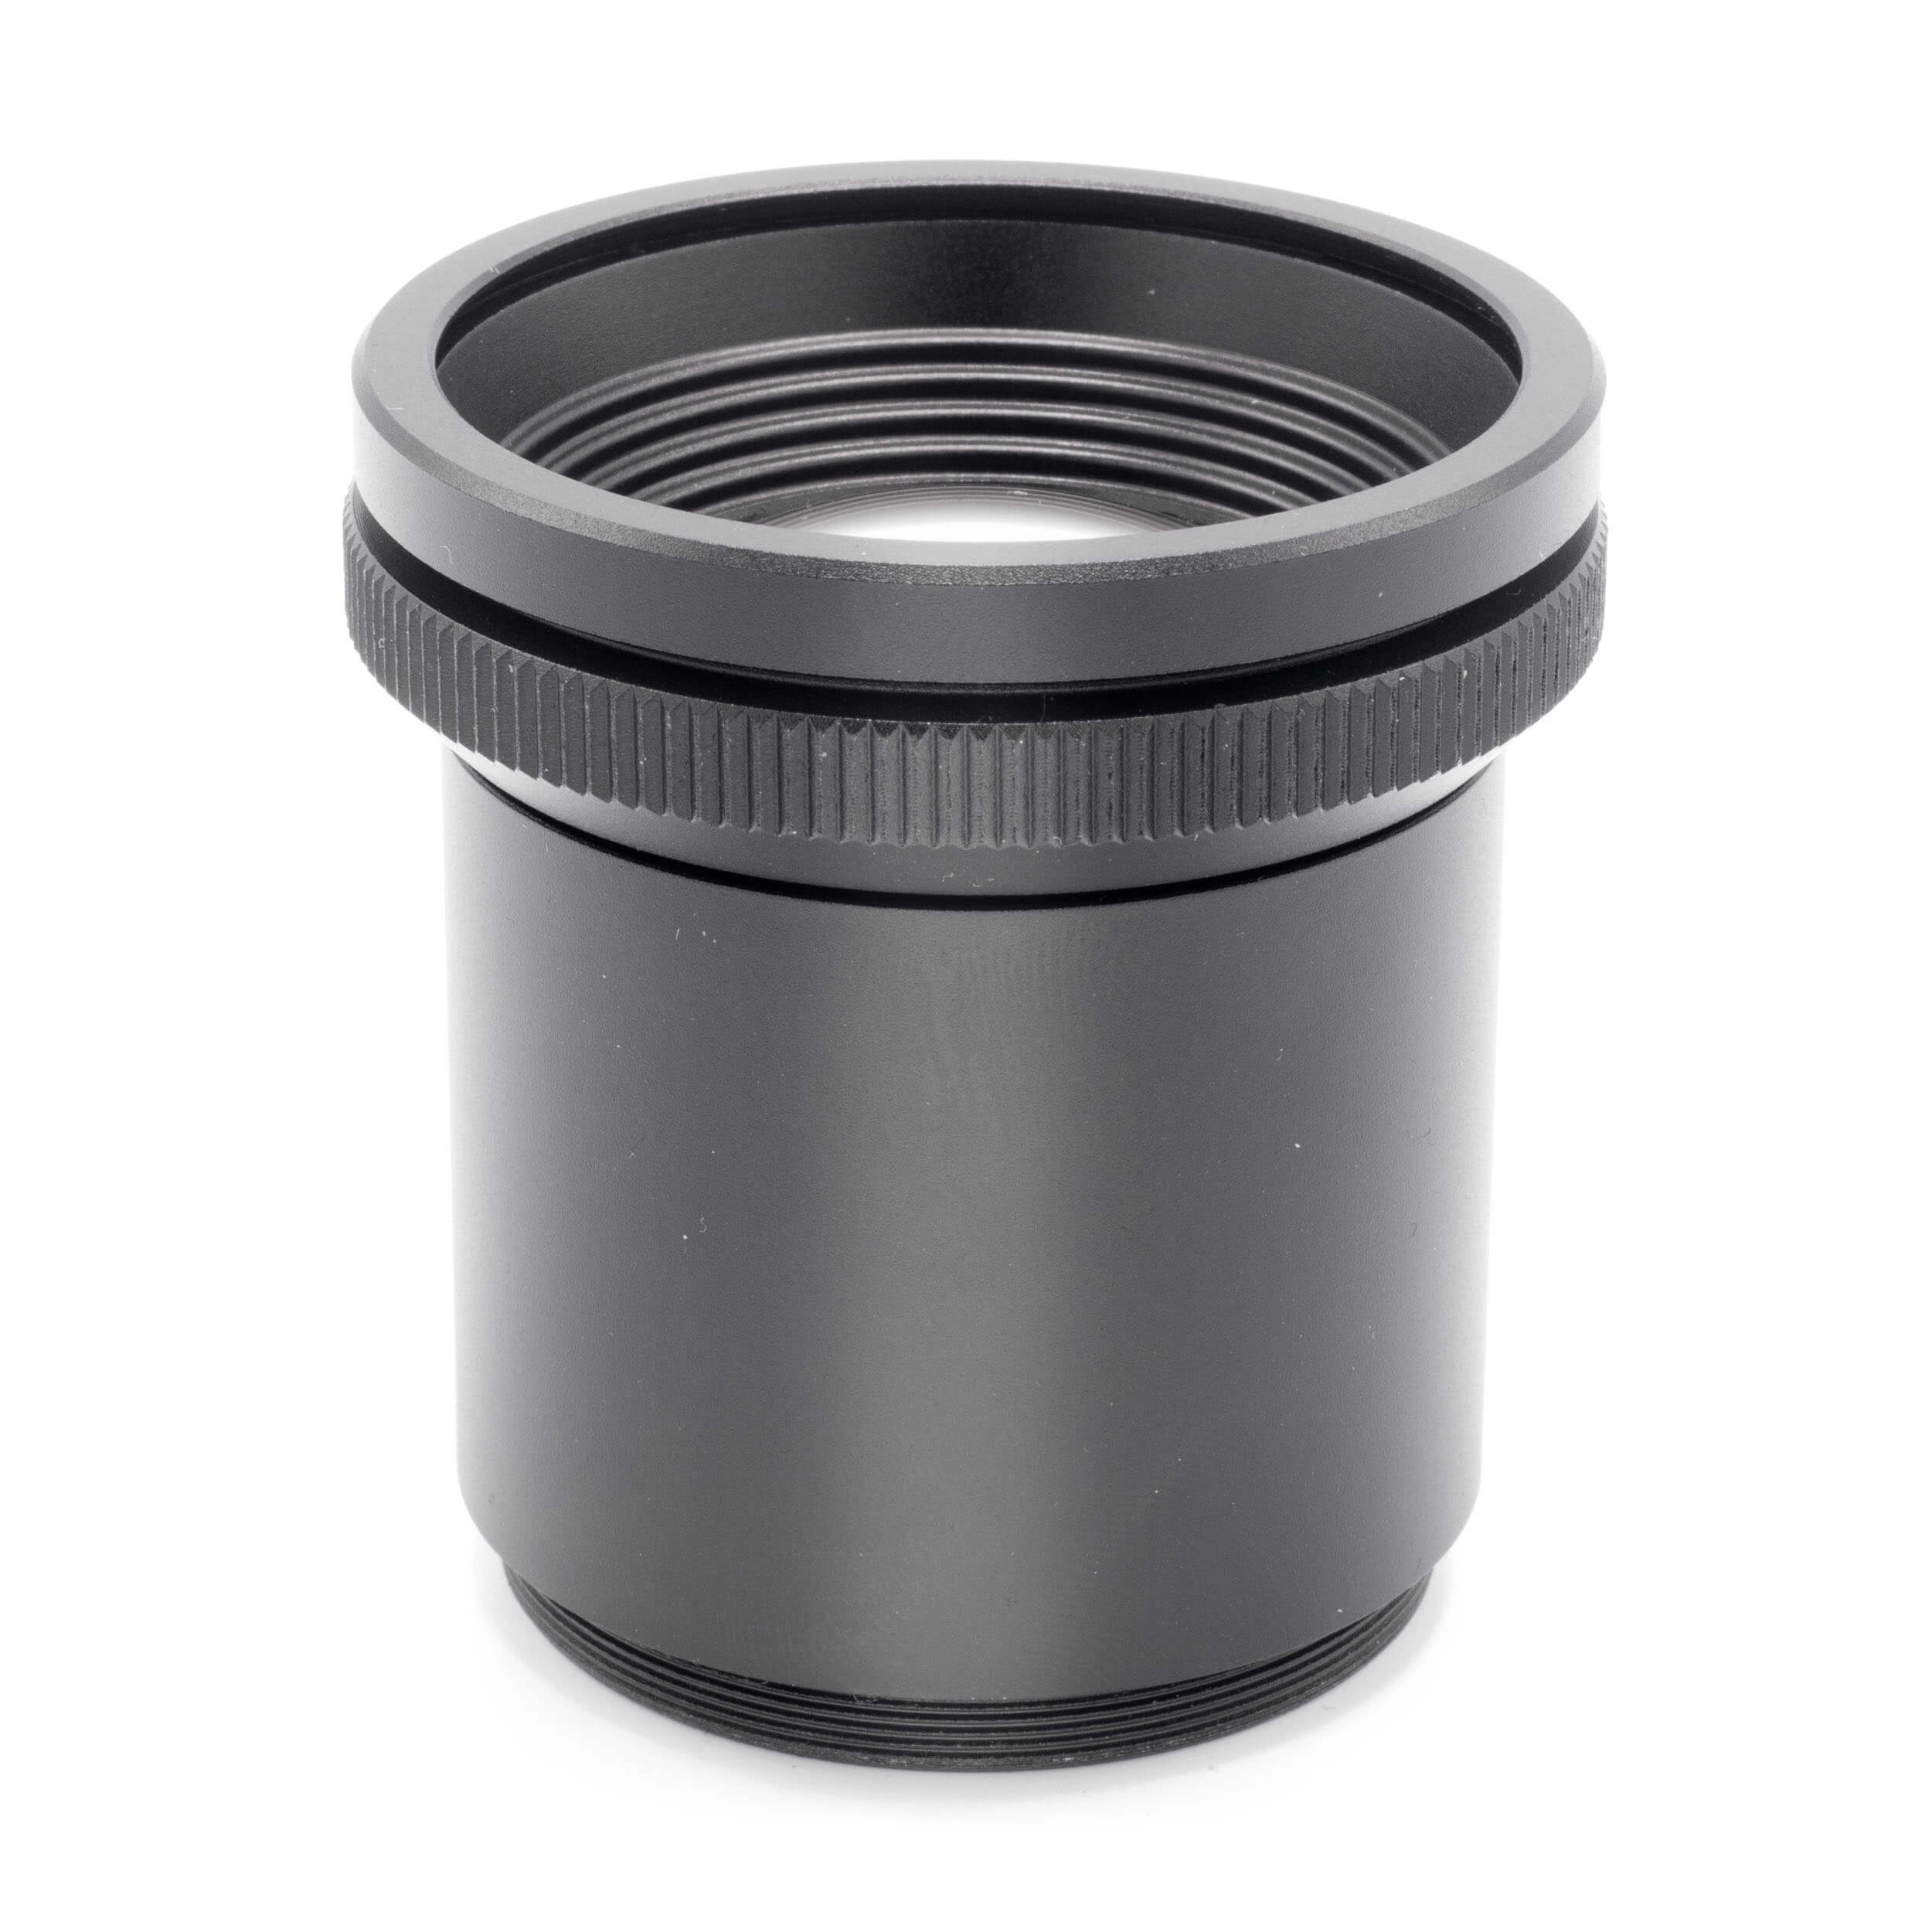 50mm Lens Optic for Pixapro Optical Snoot Spot Projector II